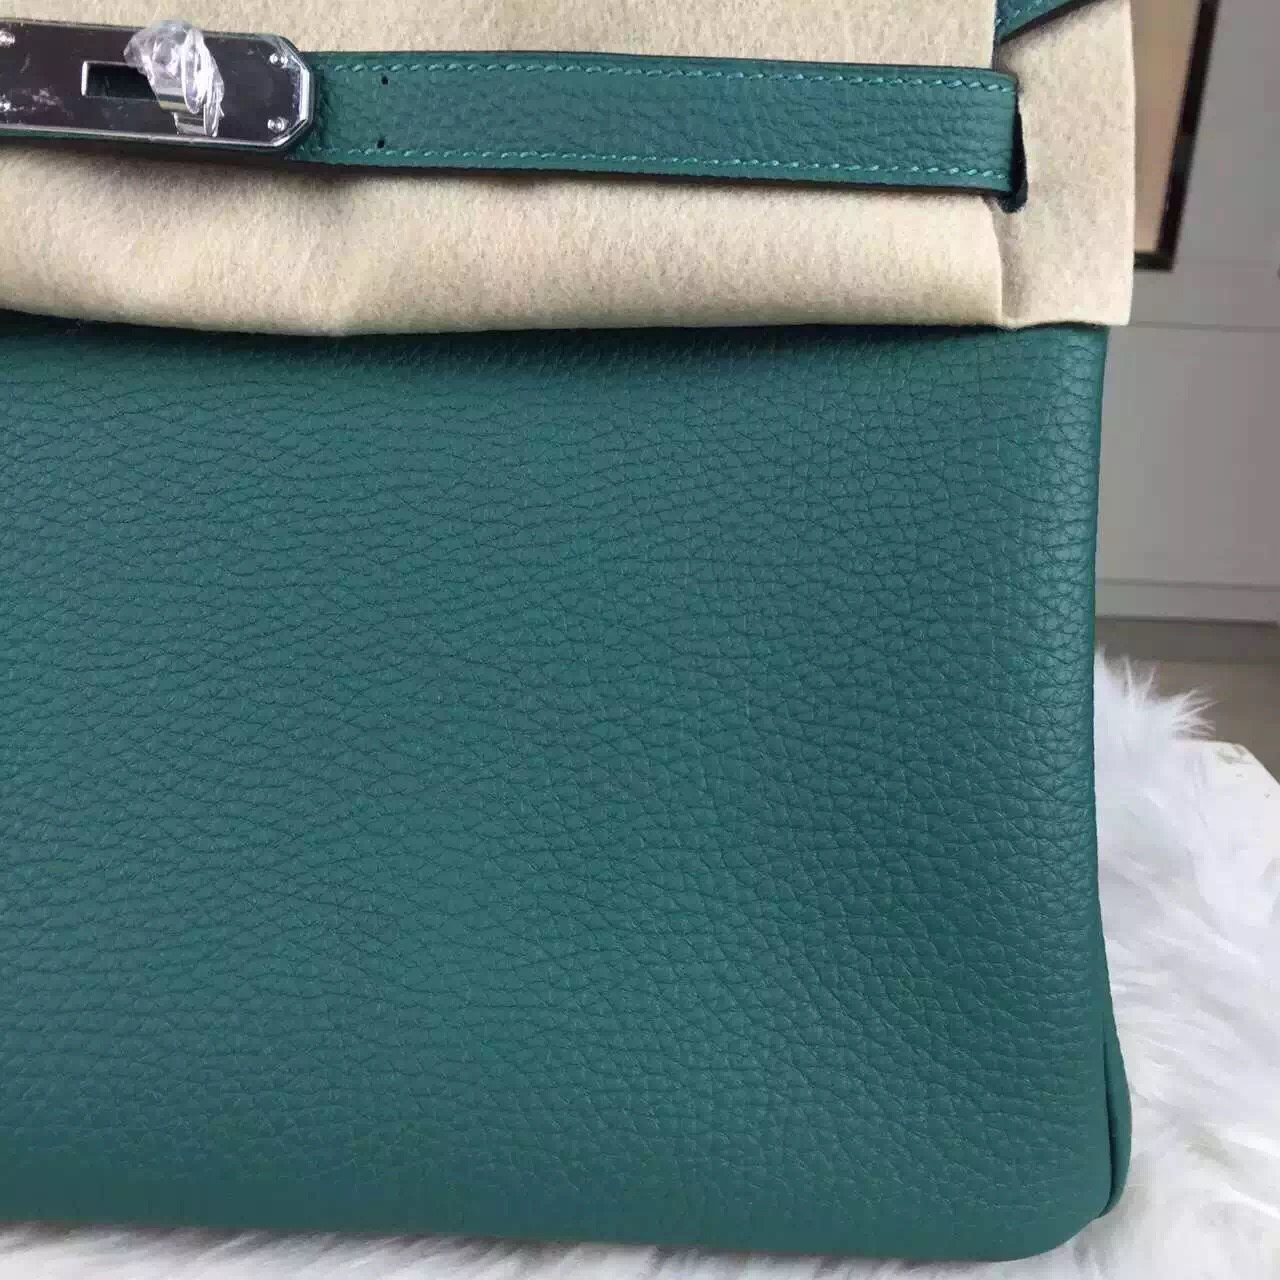 Discount Hermes Z6 Malachite Green France Togo Leather Birkin Bag30cm